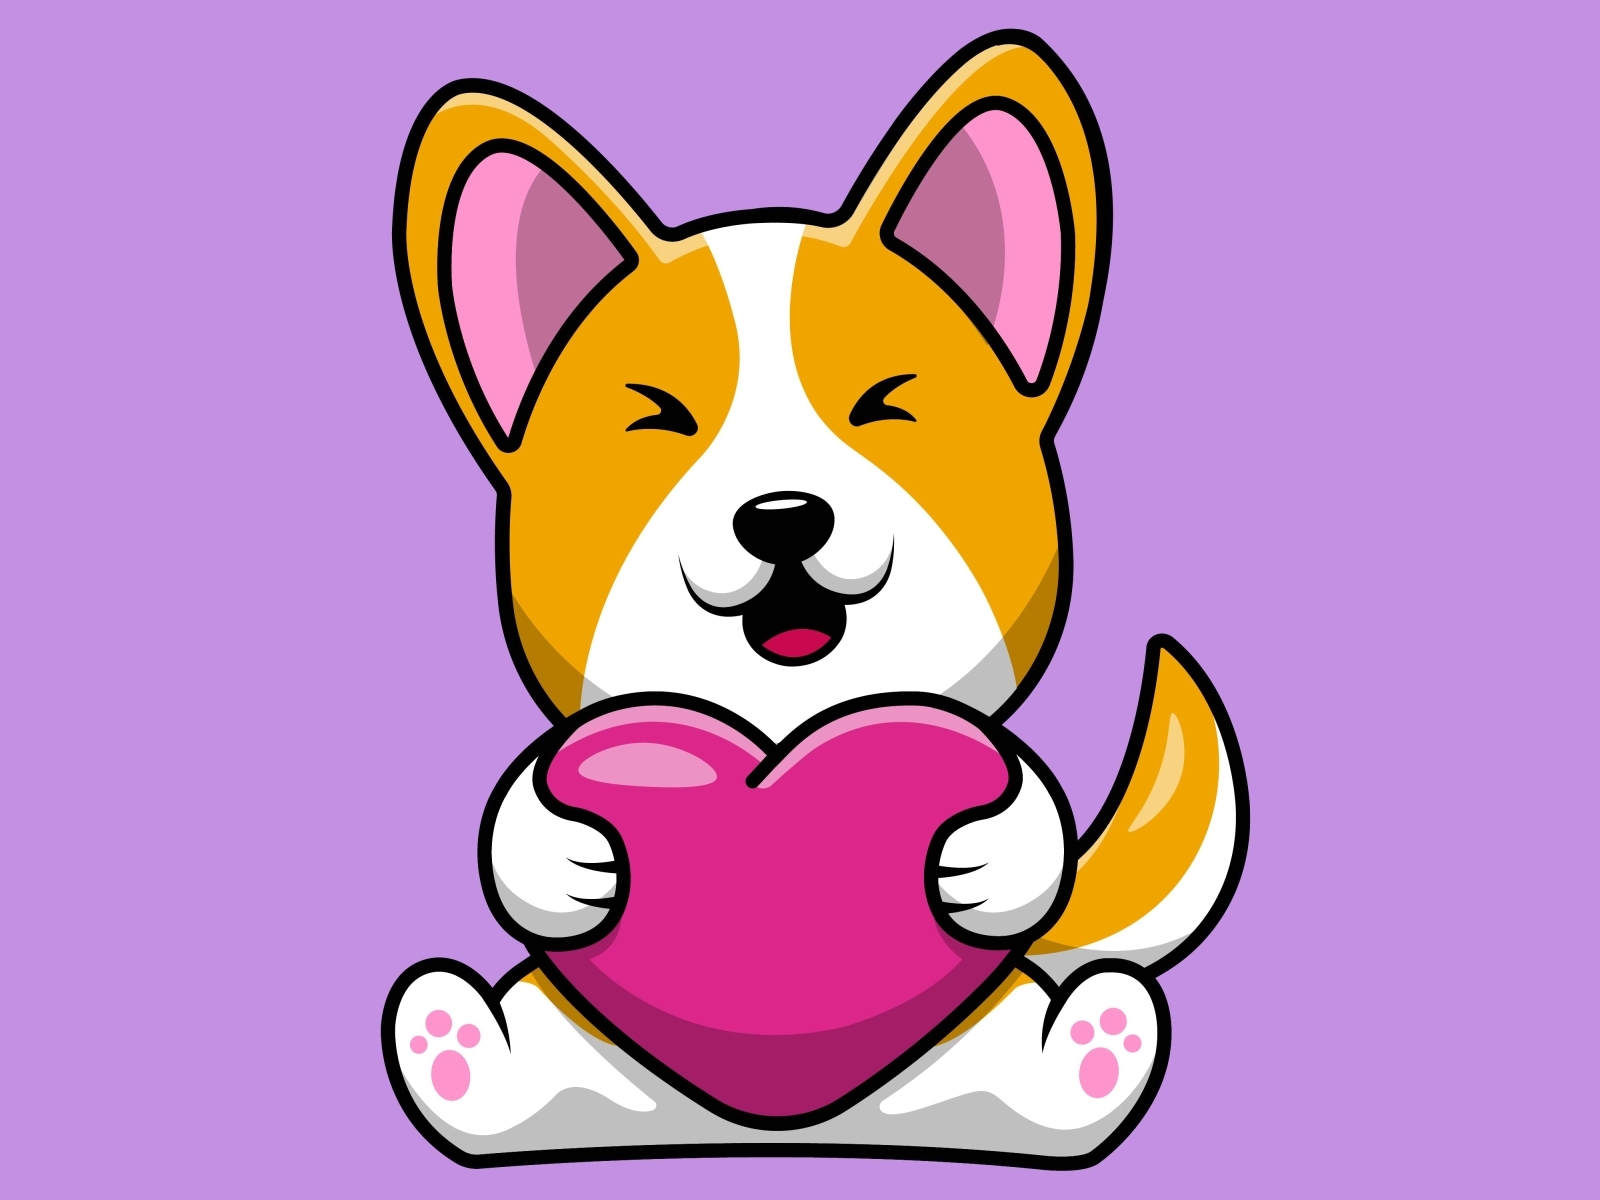 Cute Corgi Dog Holding Heart Love by Moksha Labs on Dribbble